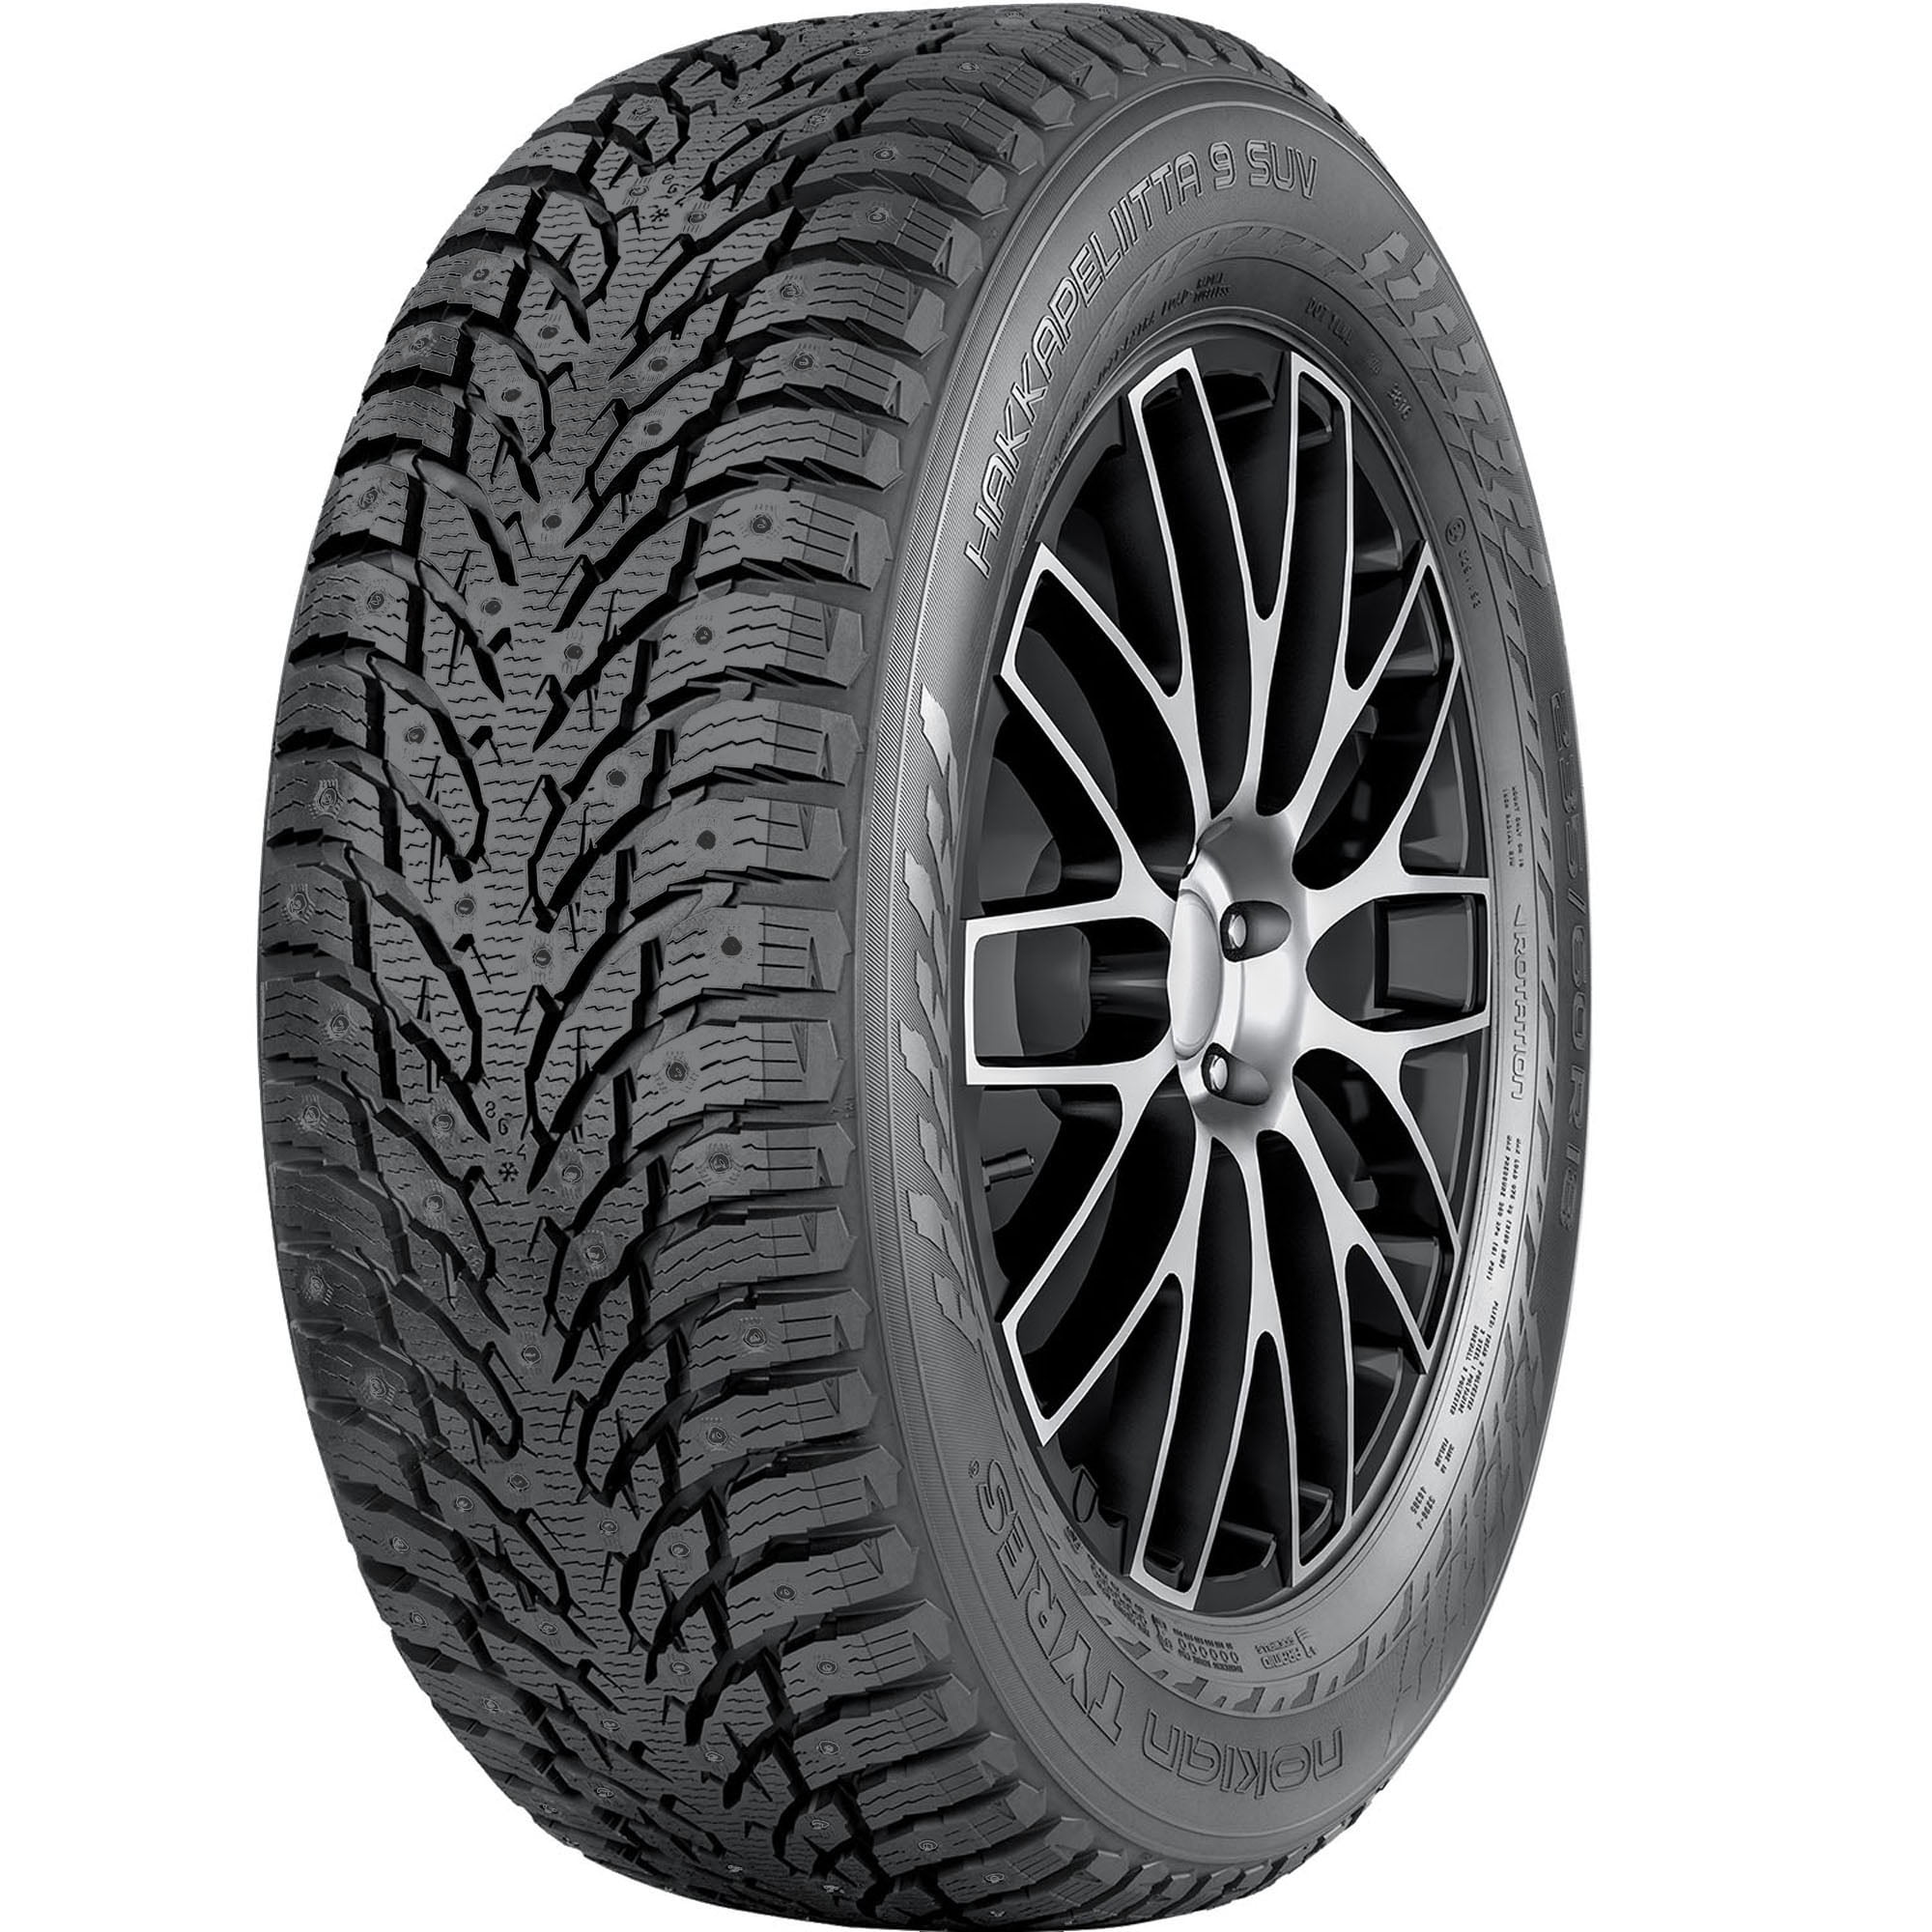 Hakkapeliitta r5 suv 255/50r20 winter tires. Set of 4. 95% Tred